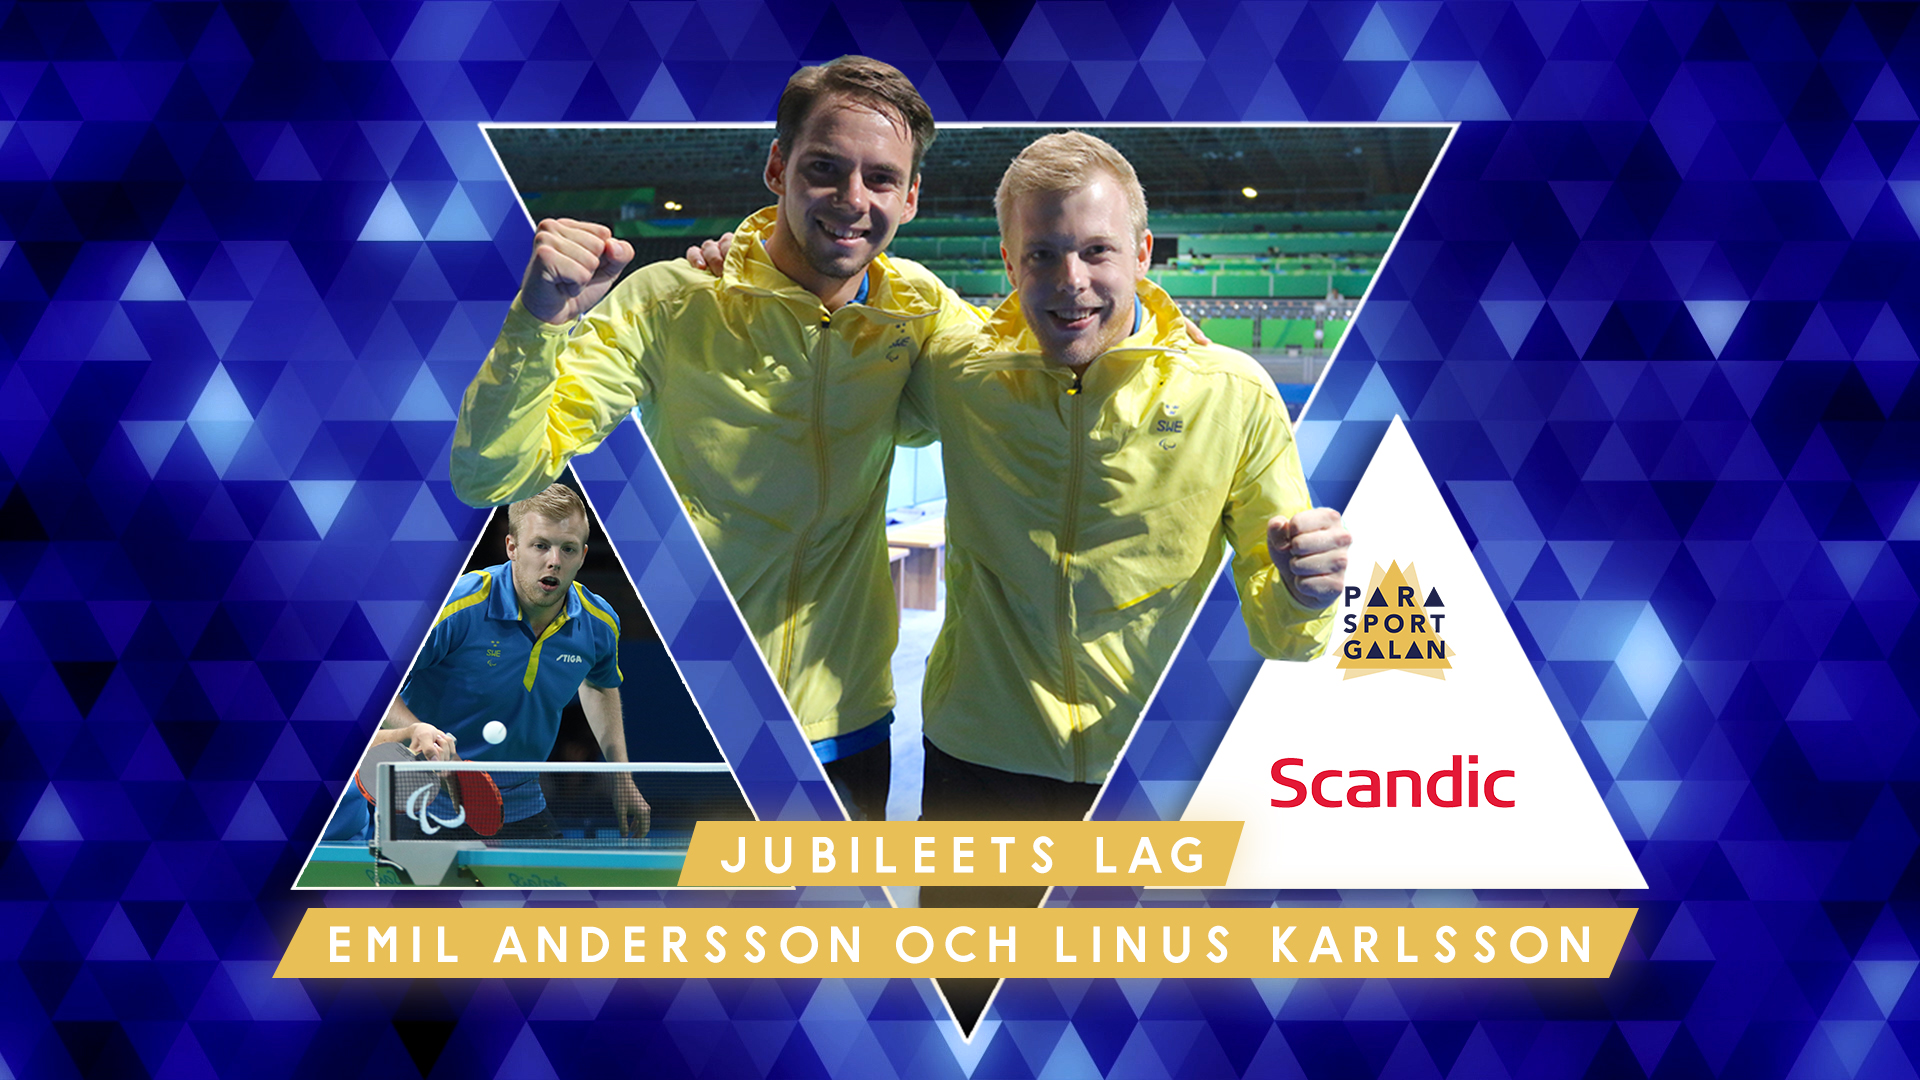 Emil Andersson och Linus Karlsson - jubileets lag